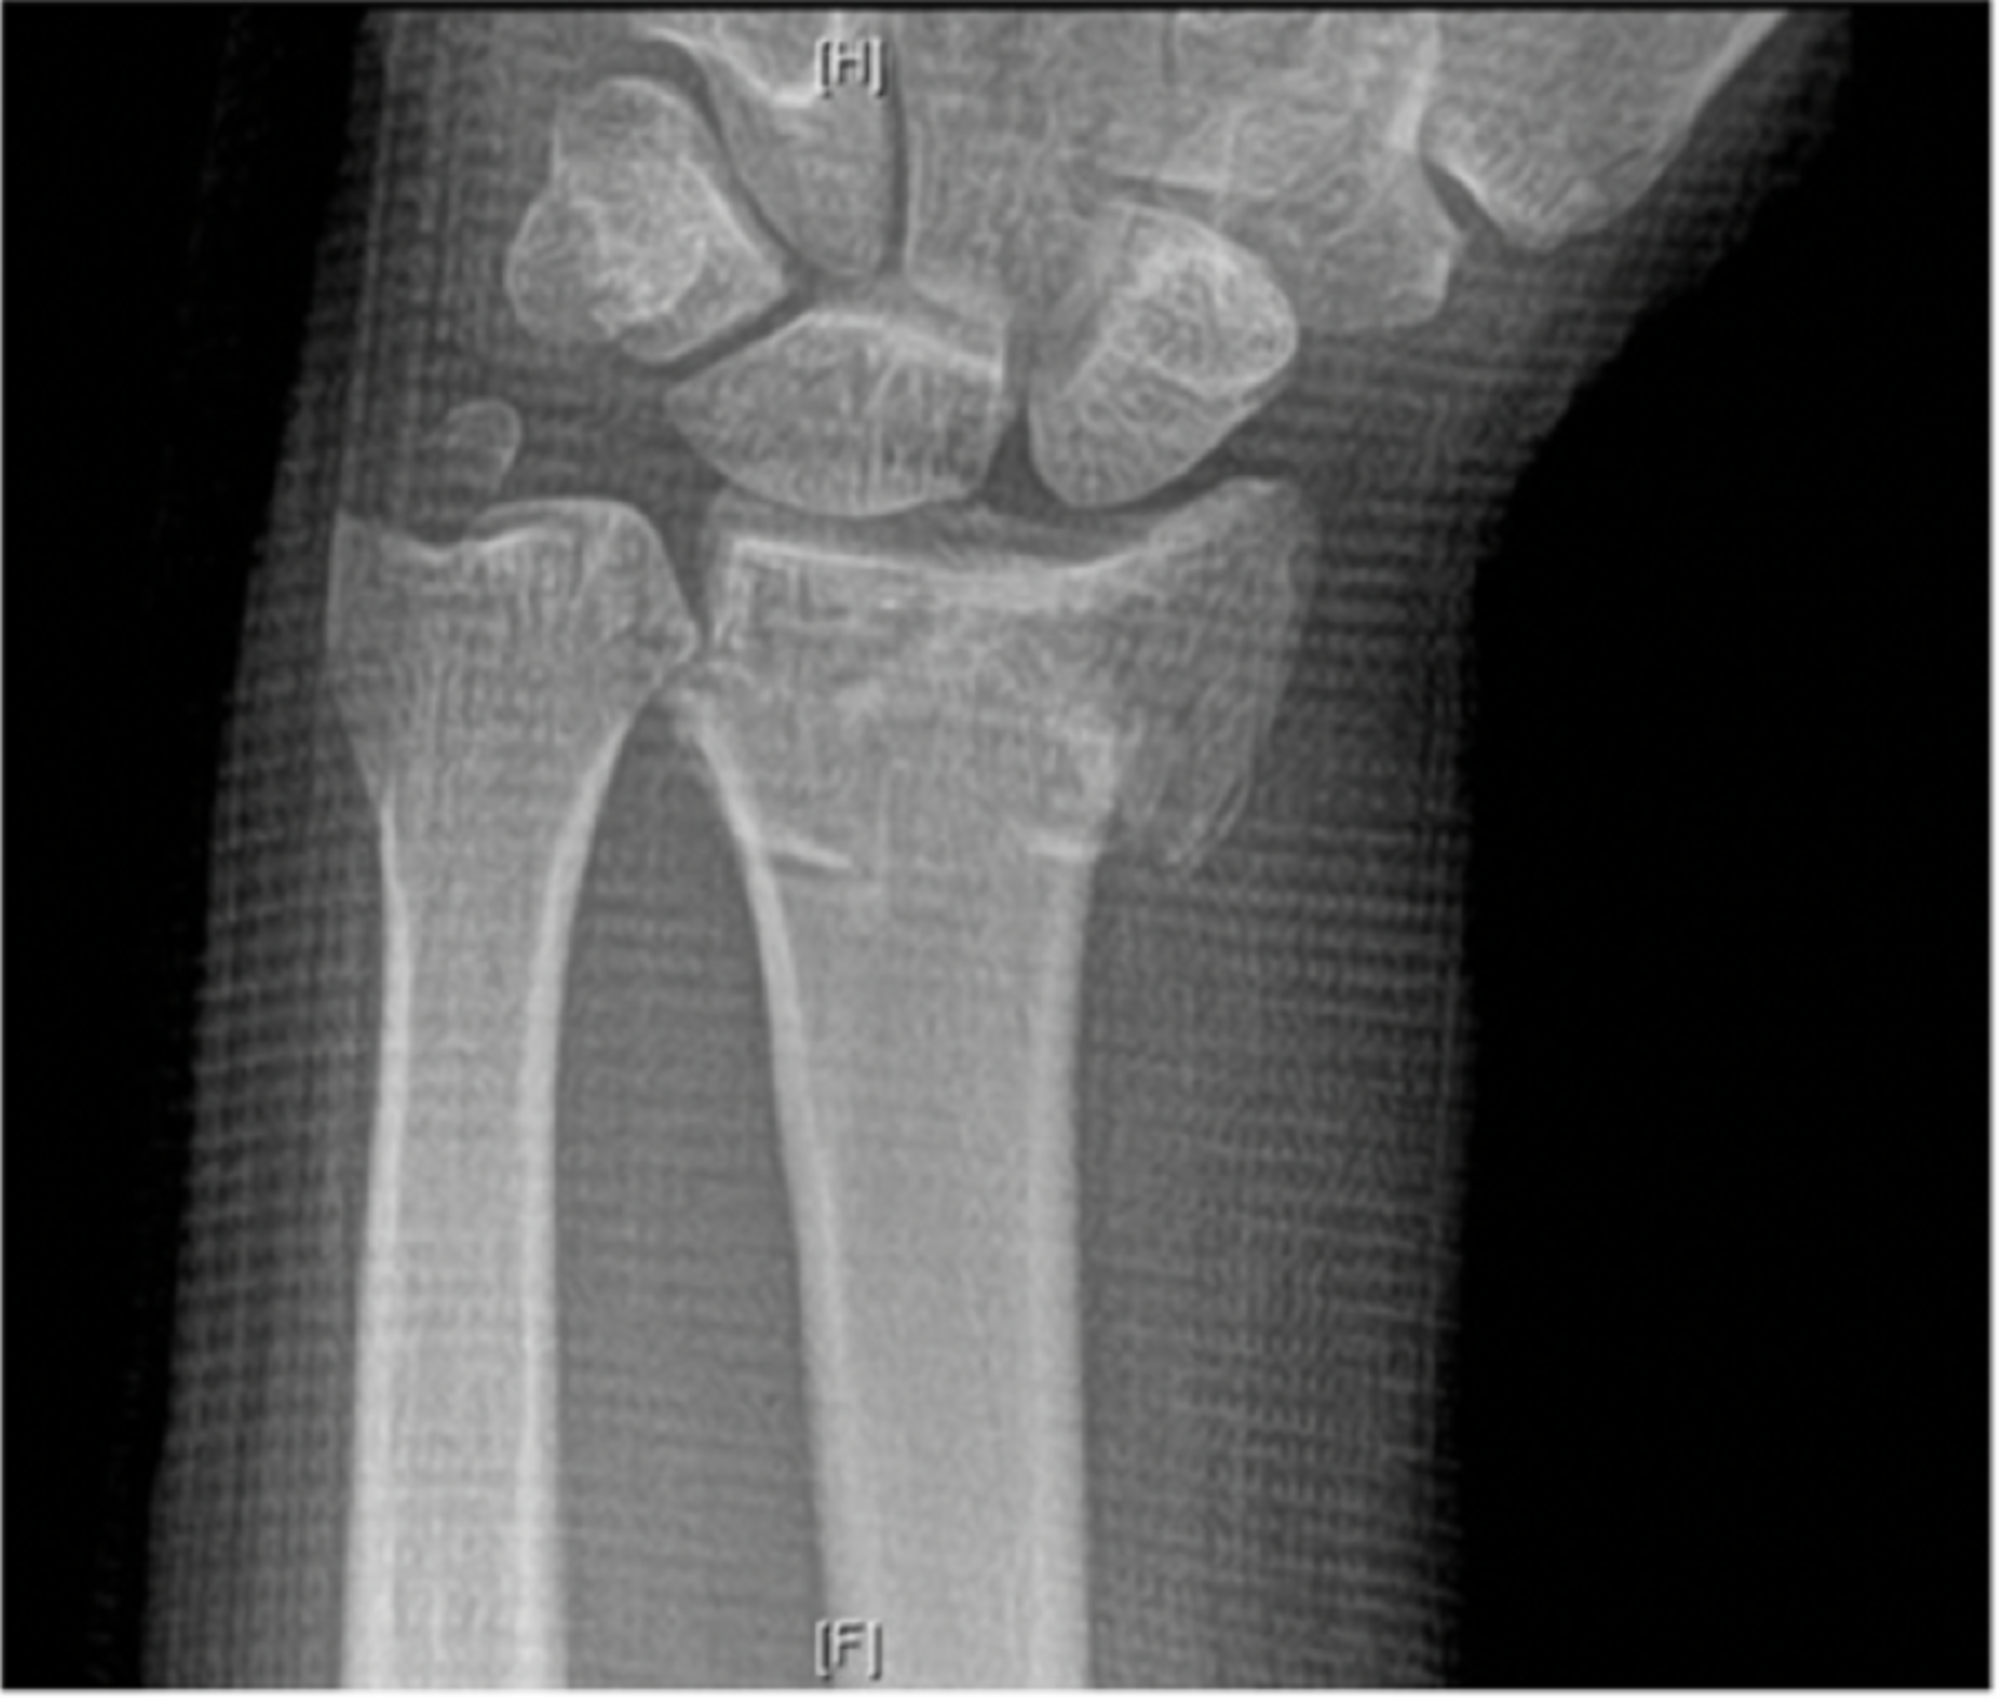 wrist distal radius fracture